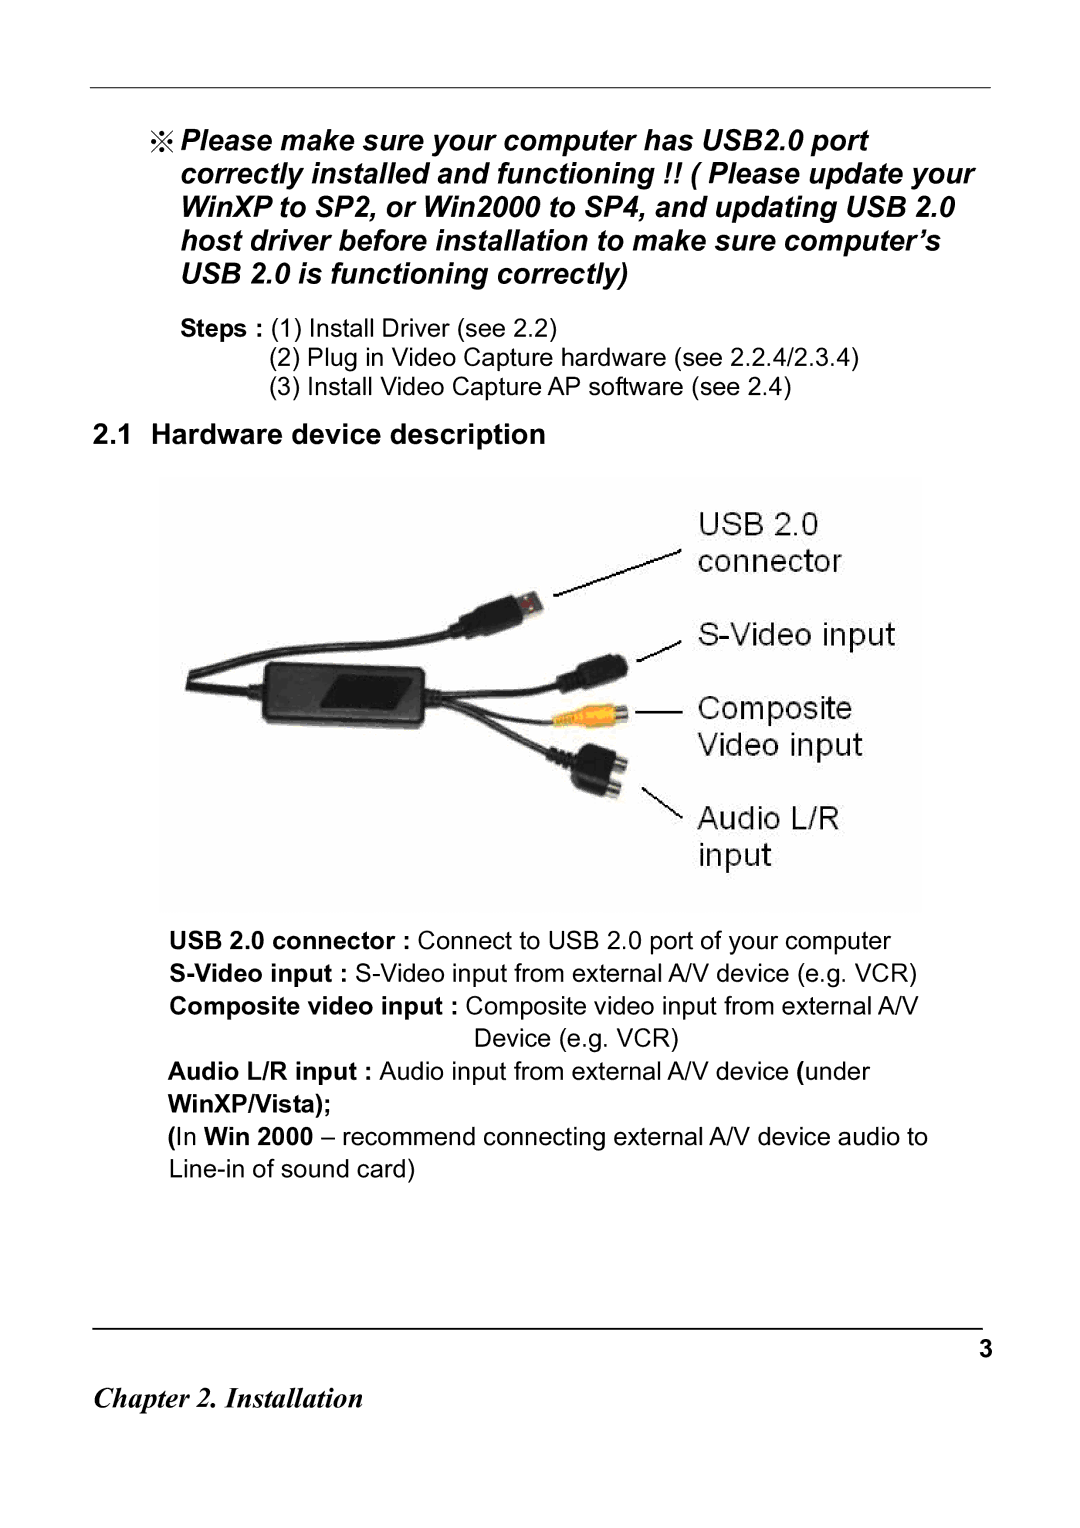 Quatech USB 2.0 user manual Hardware device description 